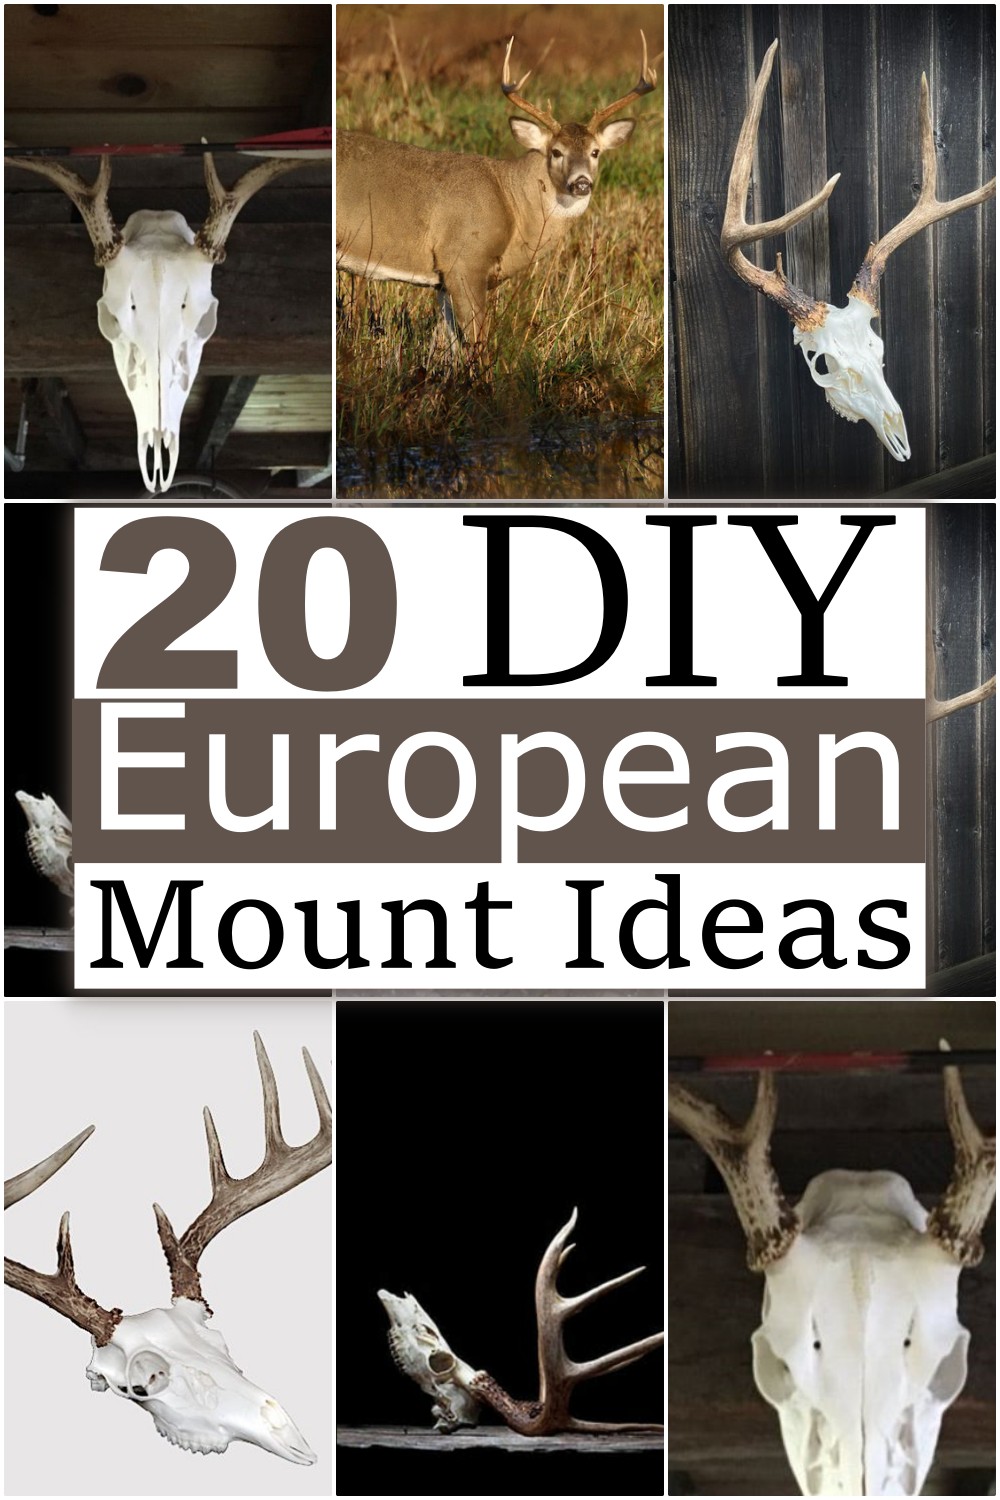 DIY European Mount Ideas